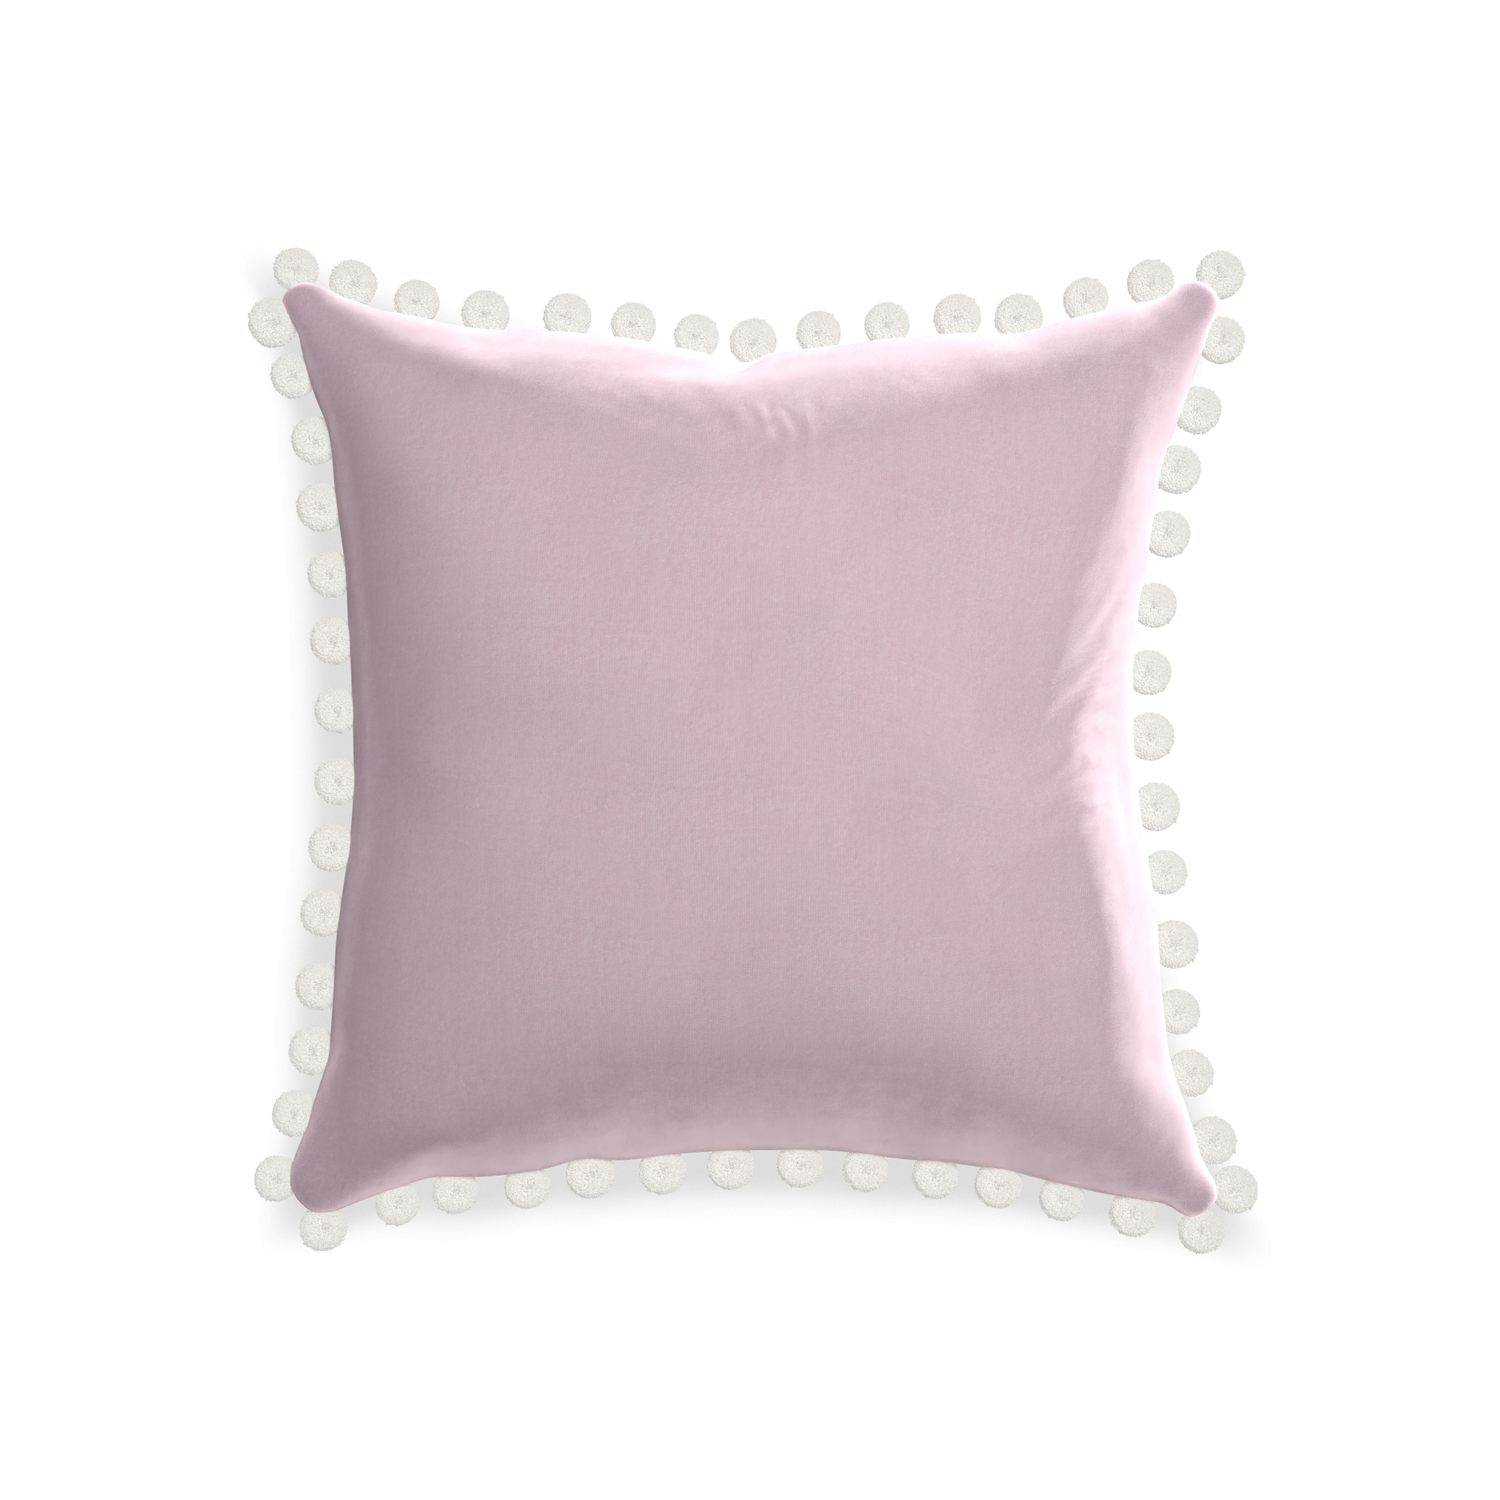 20-square lilac velvet custom pillow with snow pom pom on white background